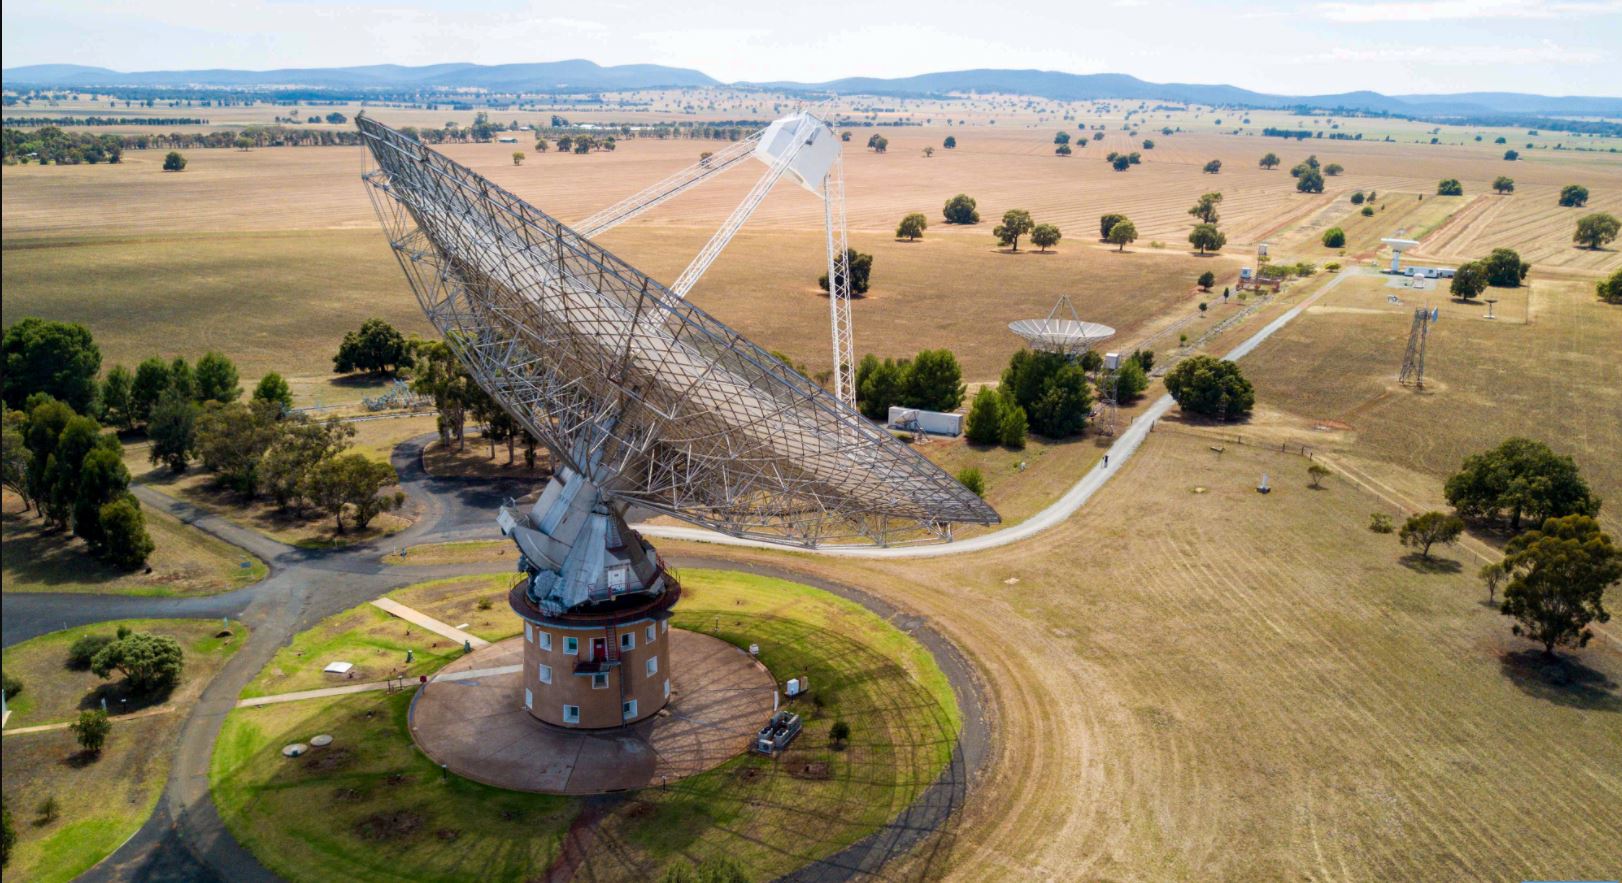 O icônico telescópio australiano foi batizado de Murriyang, e o significado é lindo